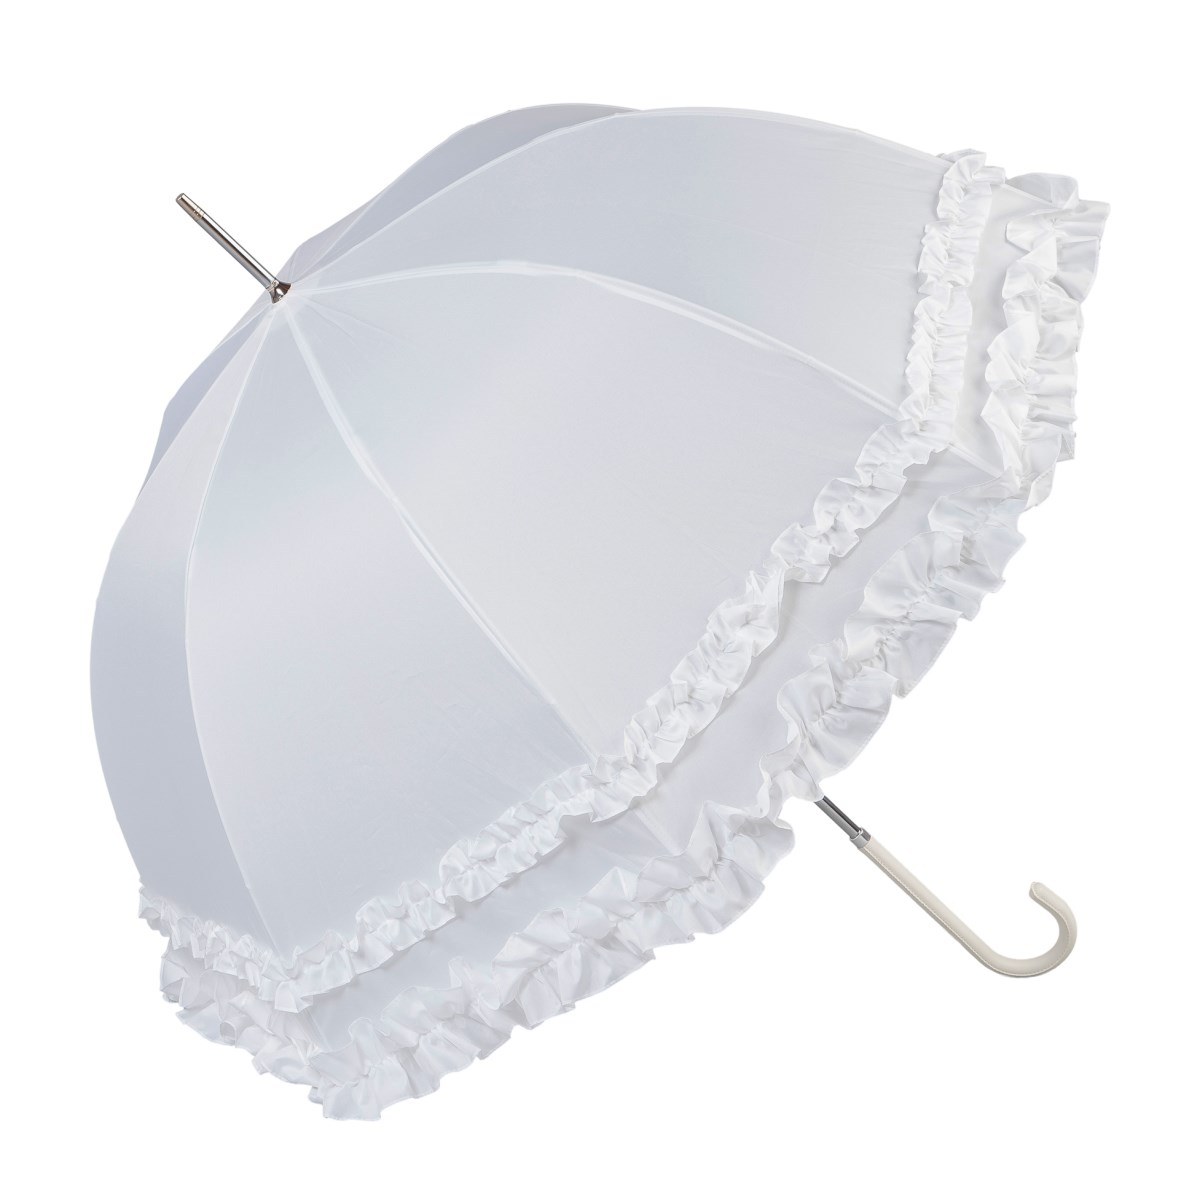 Ivory White Classic English Wedding Umbrella Accessories Umbrellas & Rain Accessories 